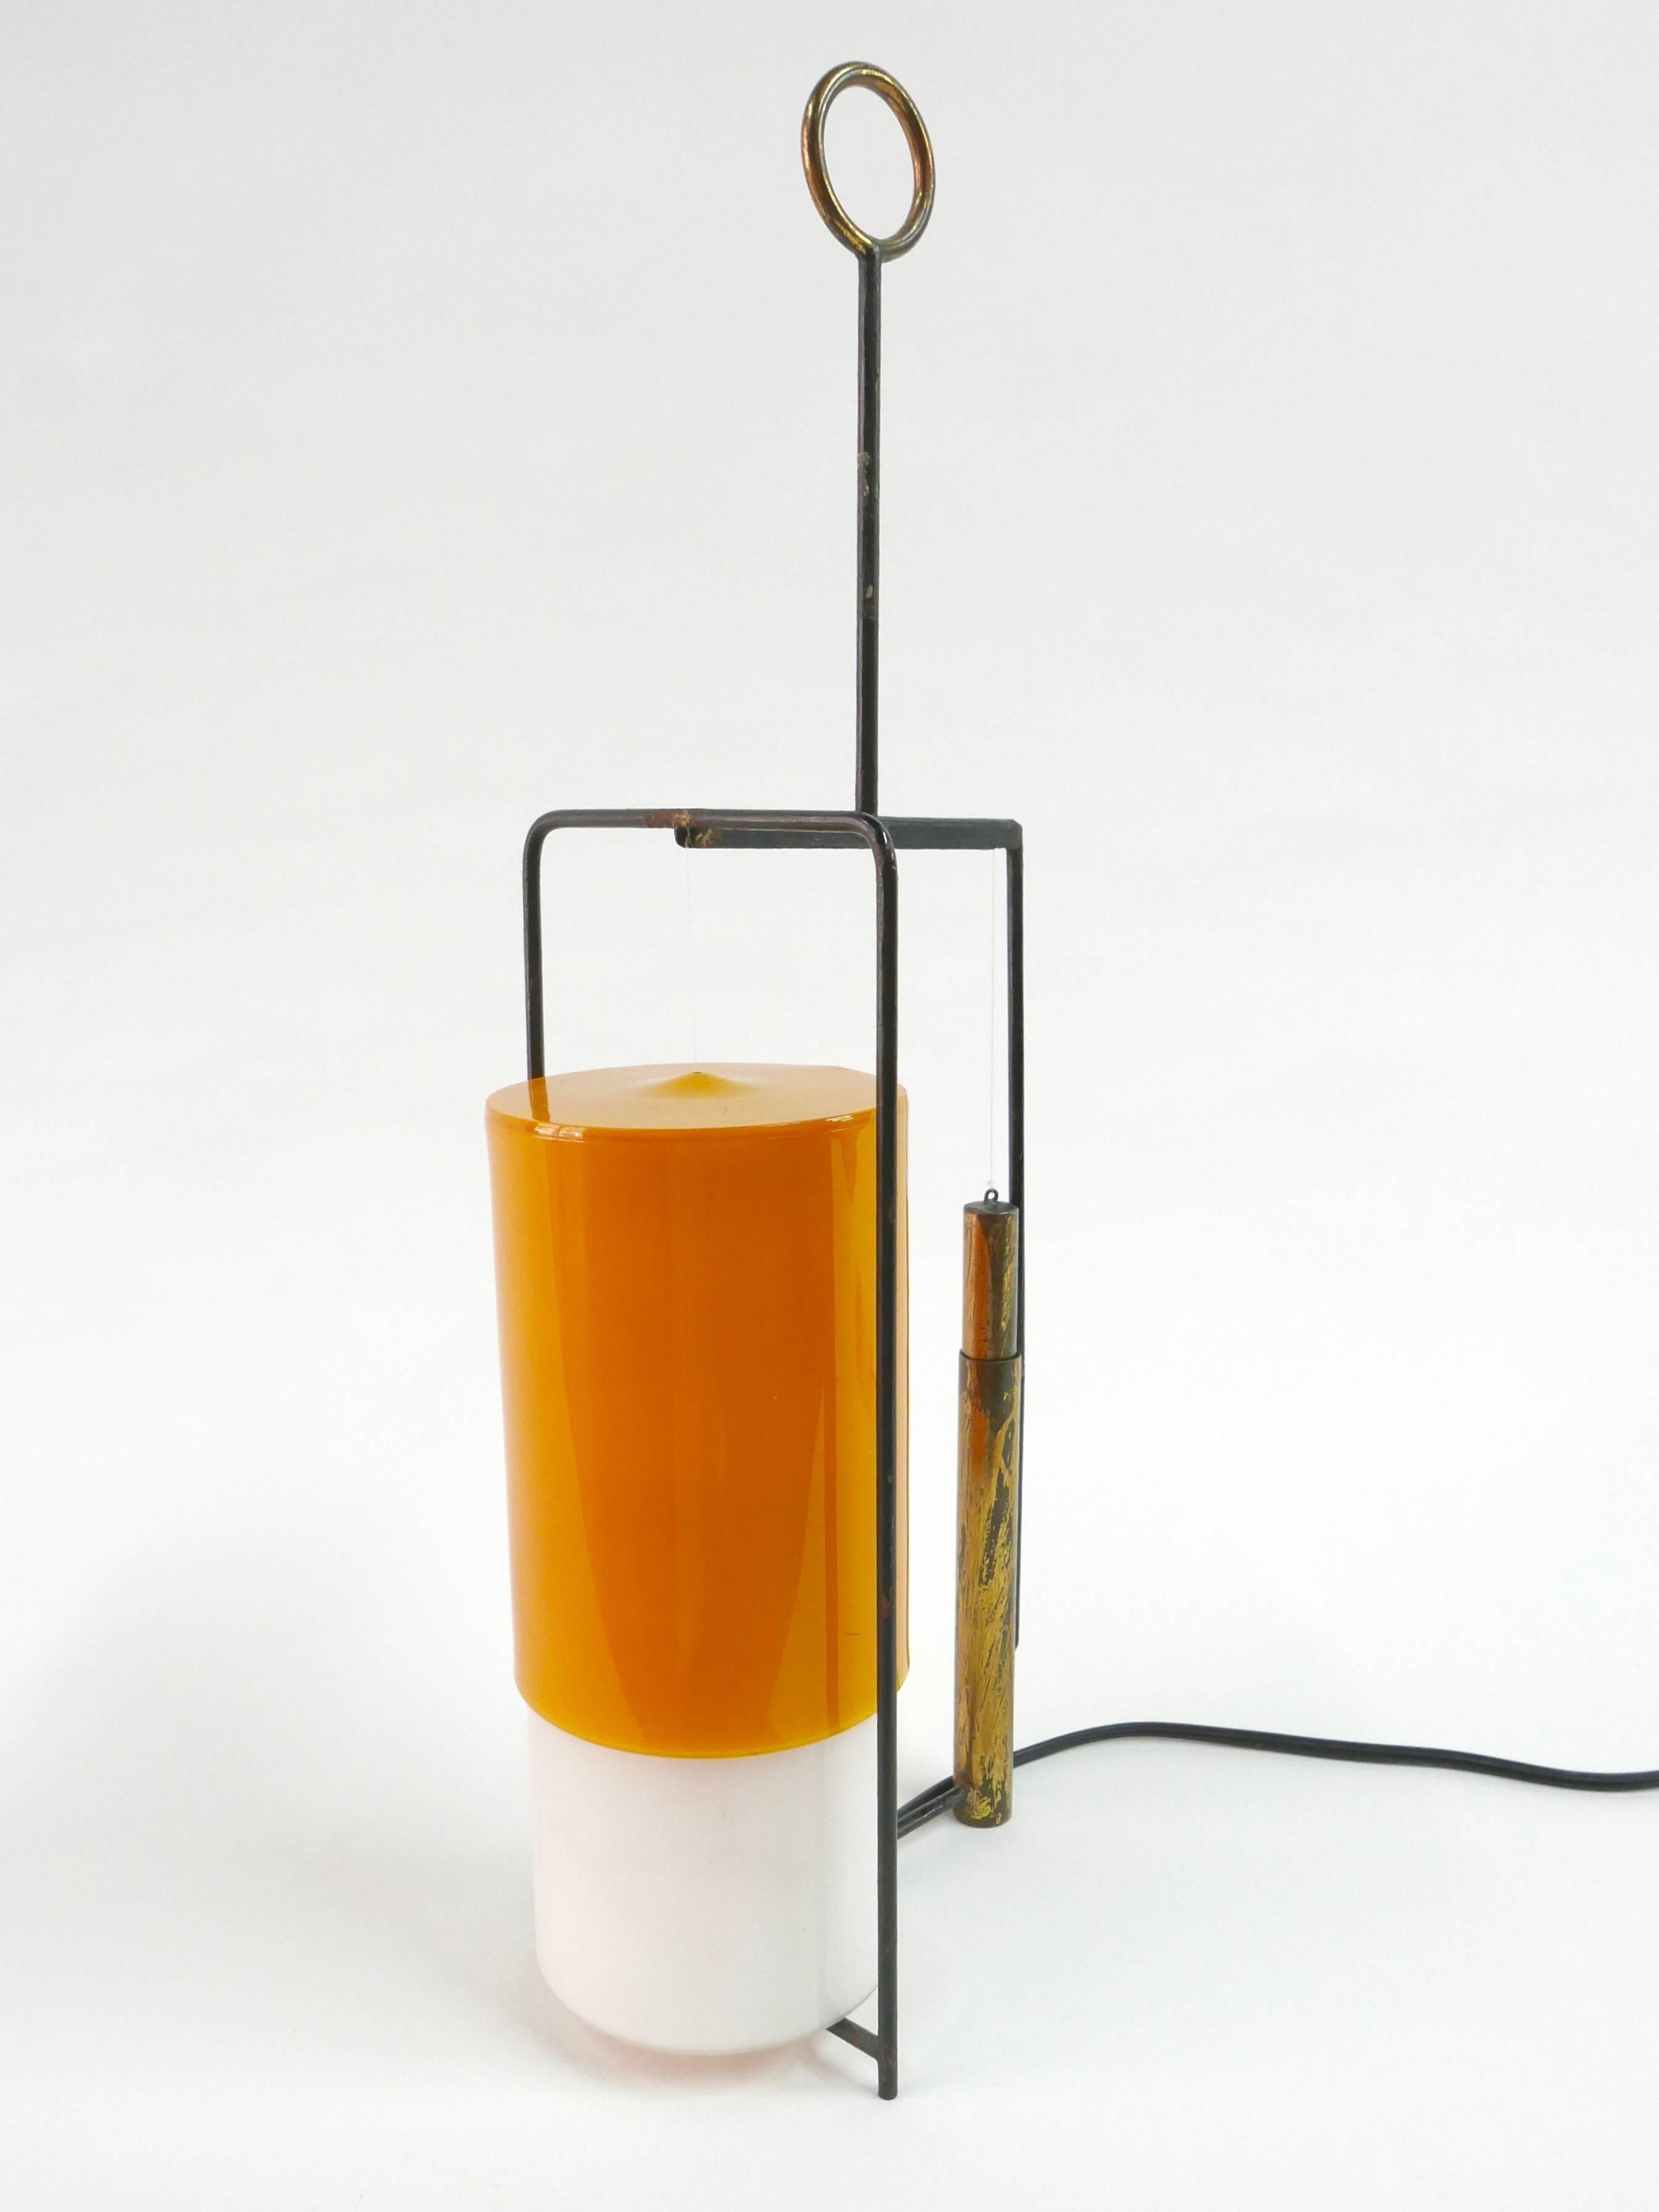 Plastic Angelo Lelli Arredoluce “Periscope” Table Lamp